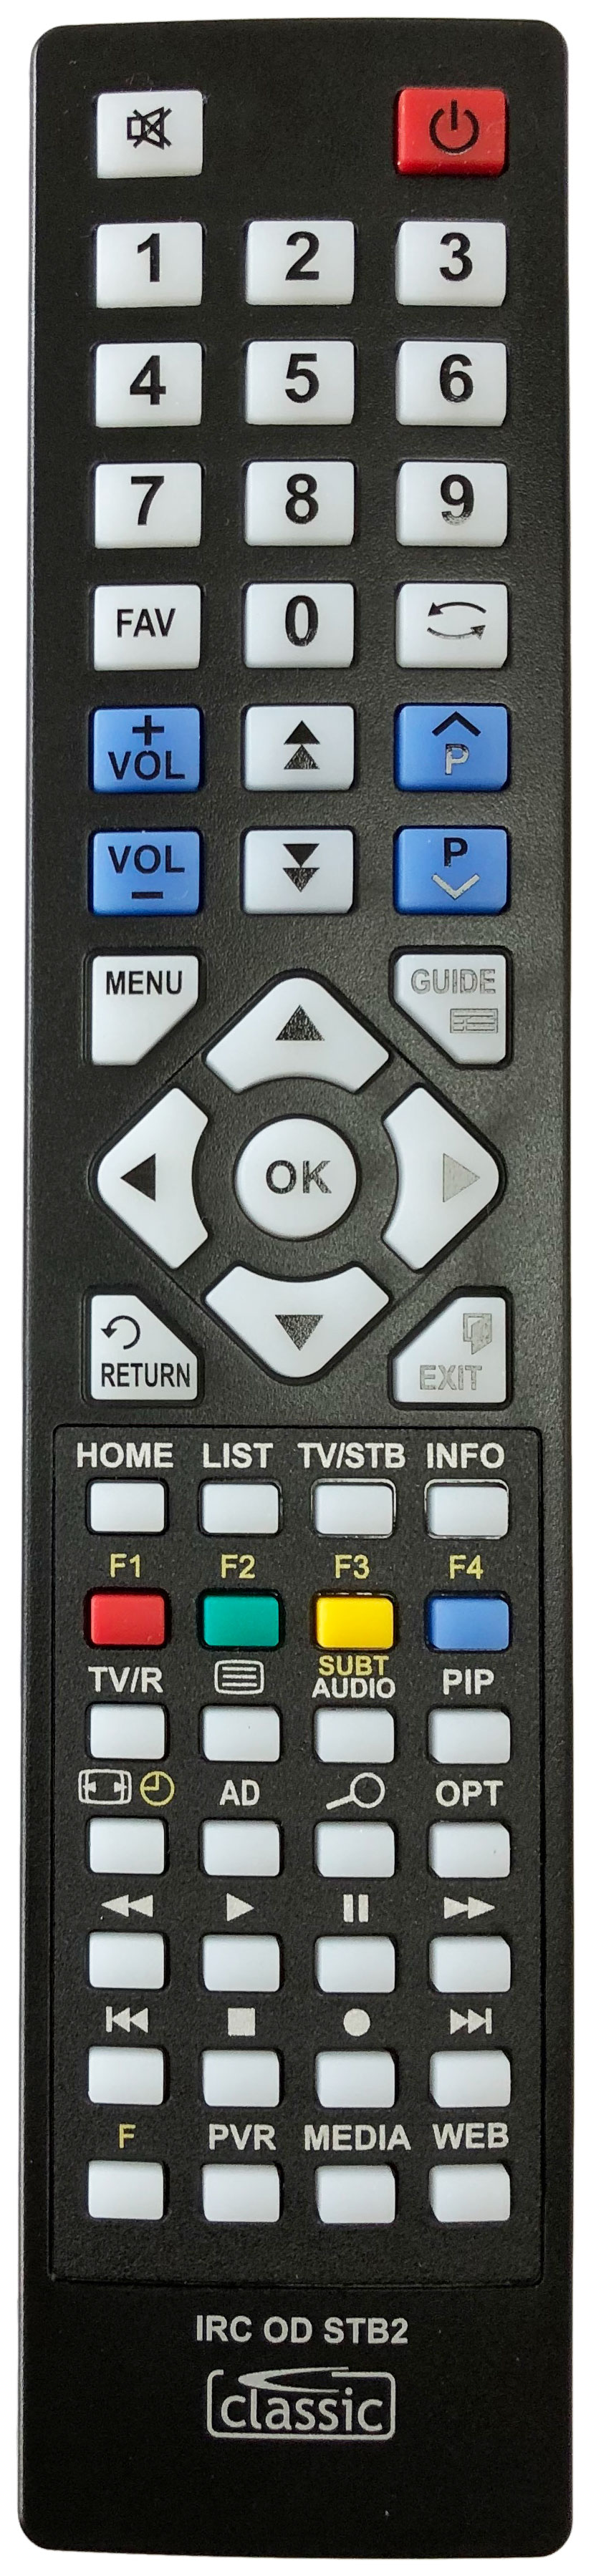 AKURA AMTDT3502 Remote Control